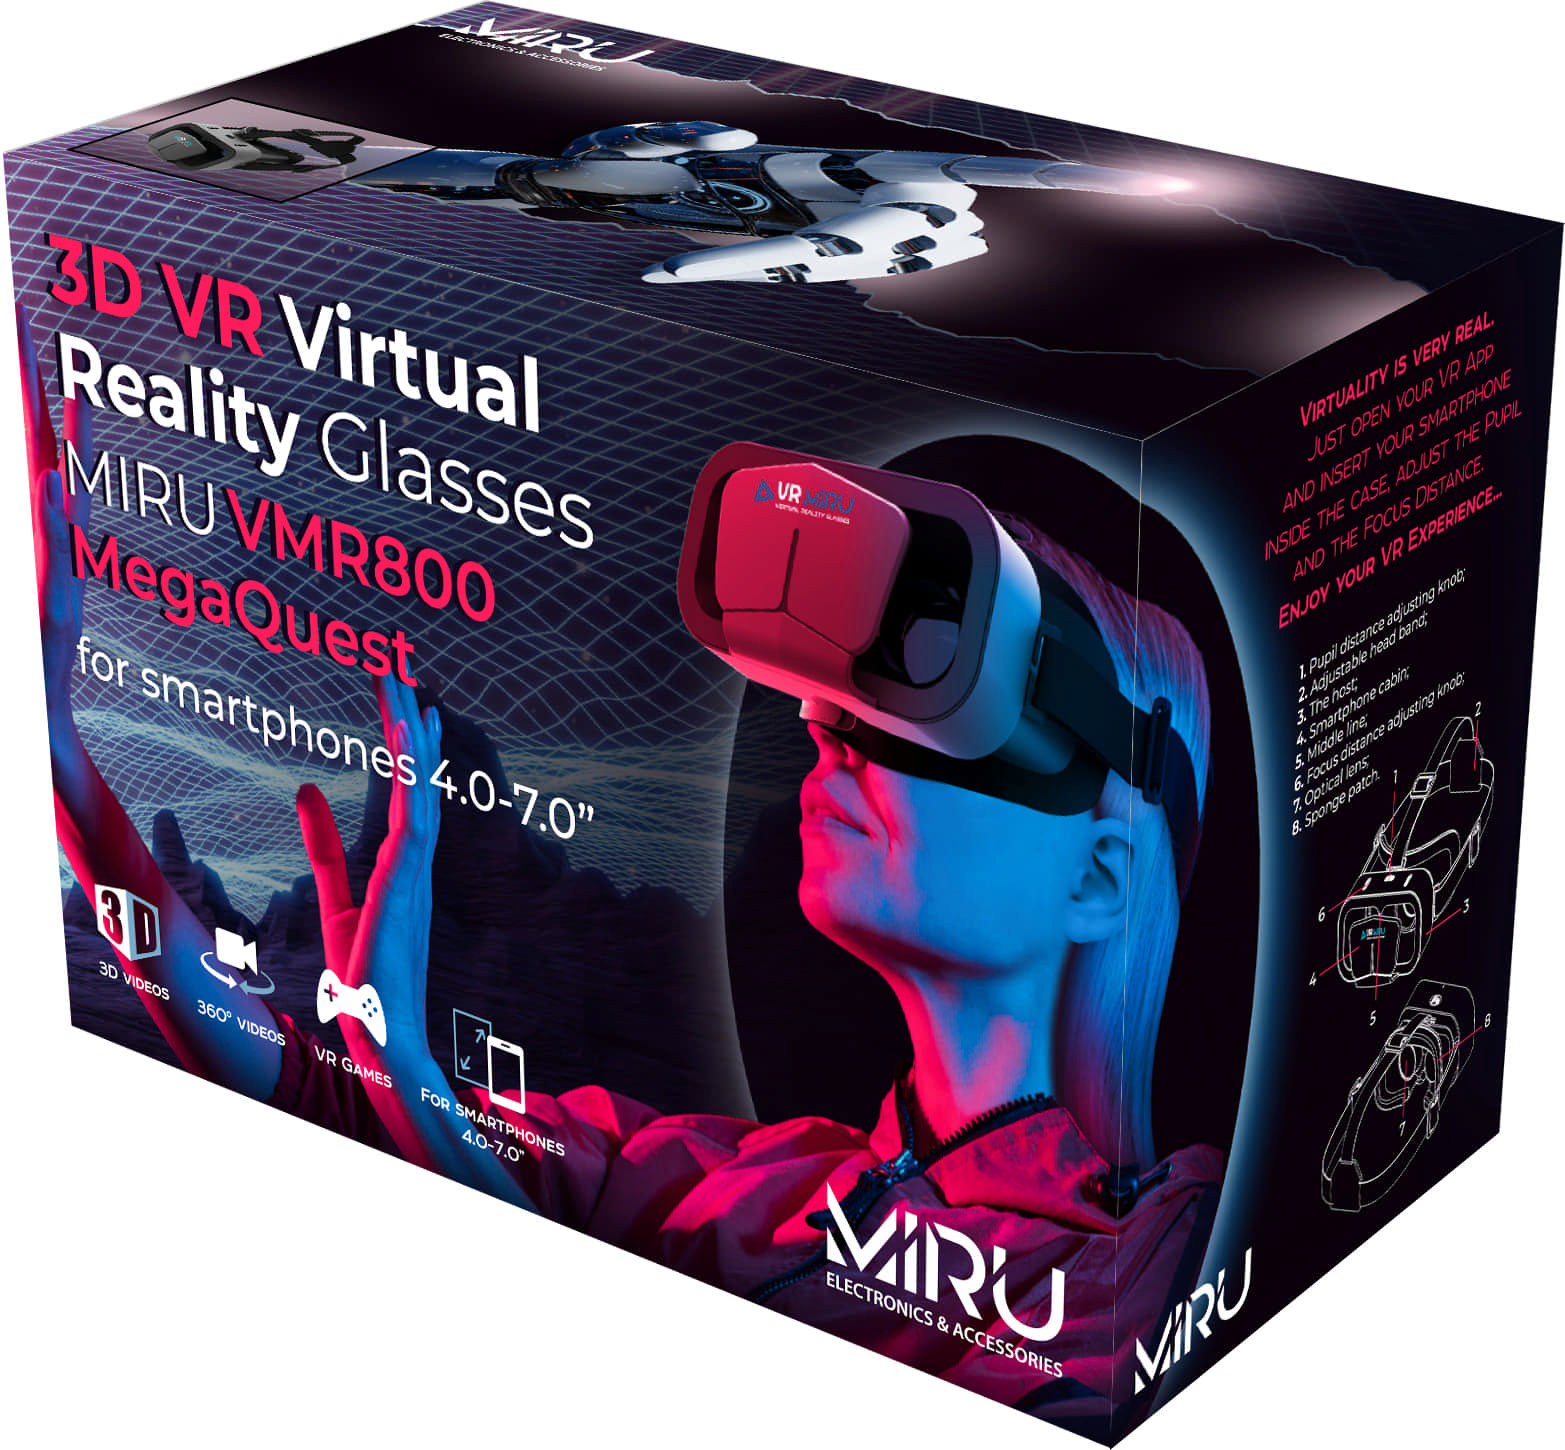 Oчки виртуальной реальности MIRU VMR800 Mega Quest - Фото 12